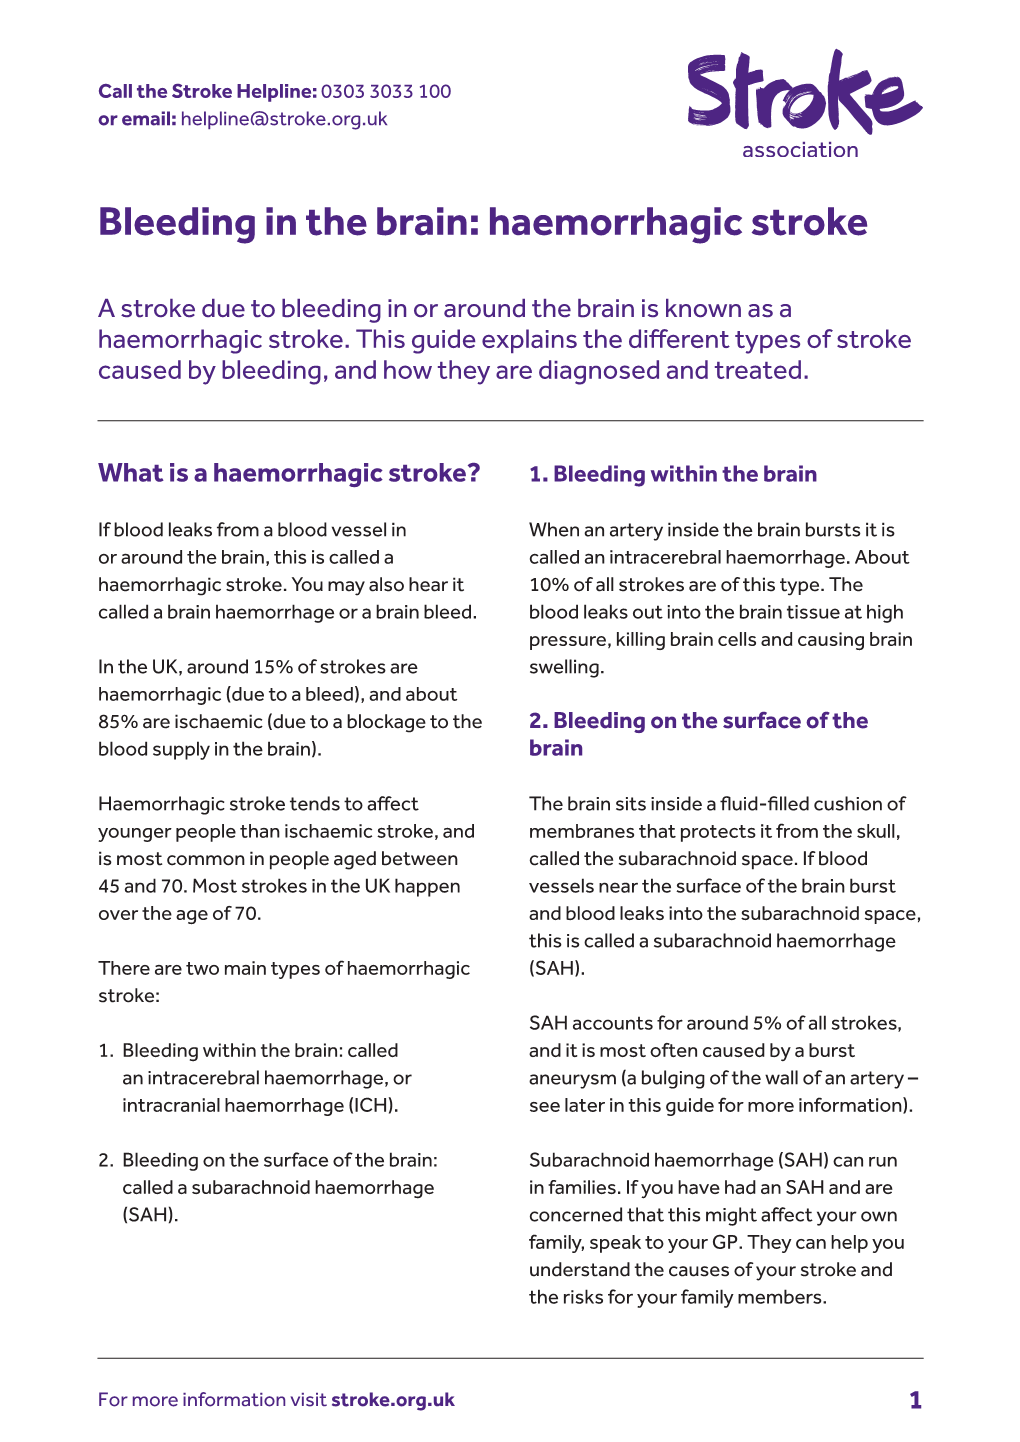 Bleeding in the Brain: Haemorrhagic Stroke